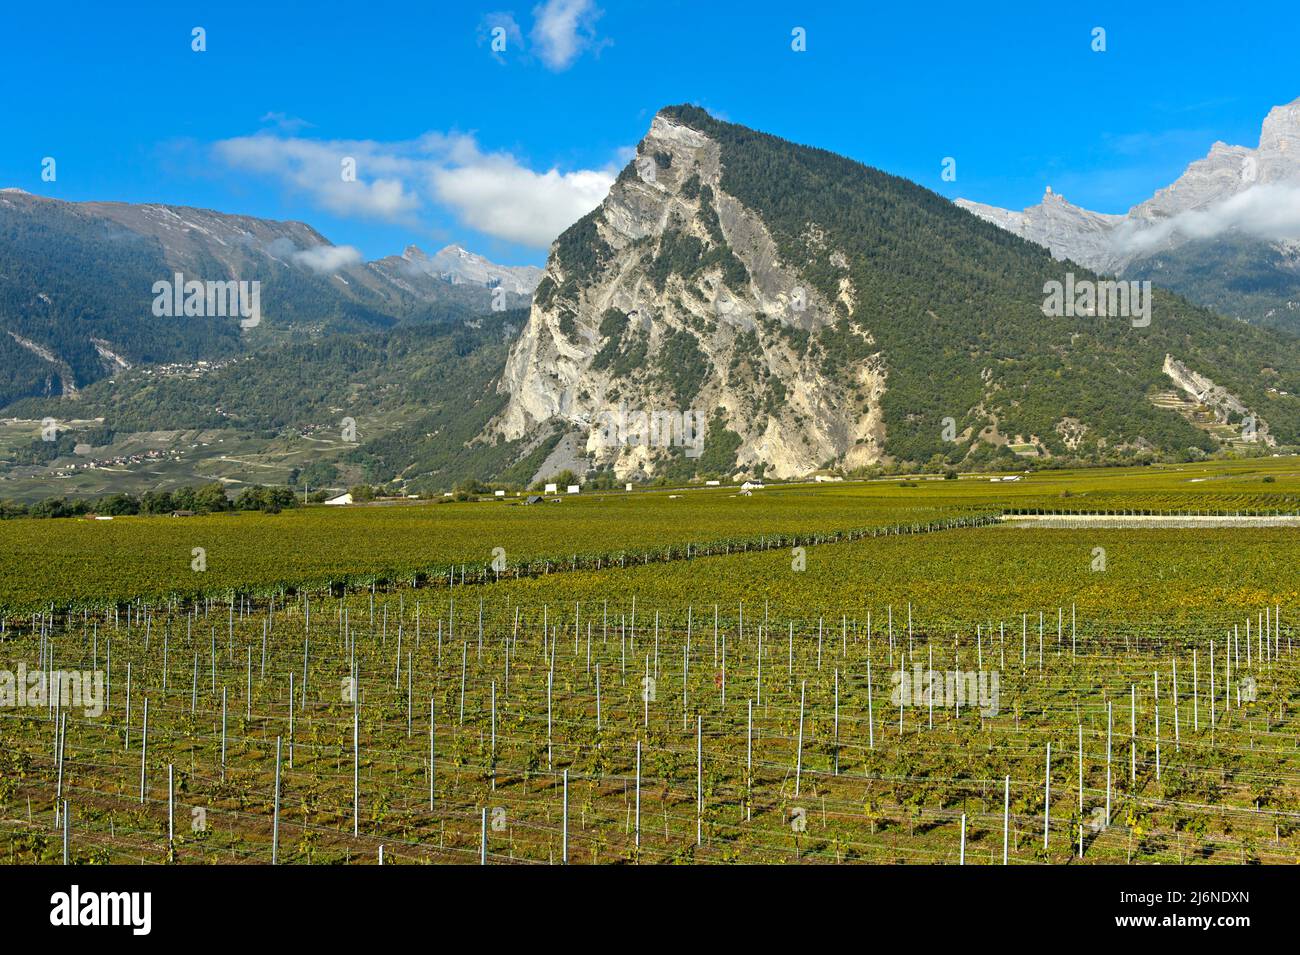 The Ardeve mountain peak towers over the Leytron wine region, Leytron, Valais, Switzerland Stock Photo